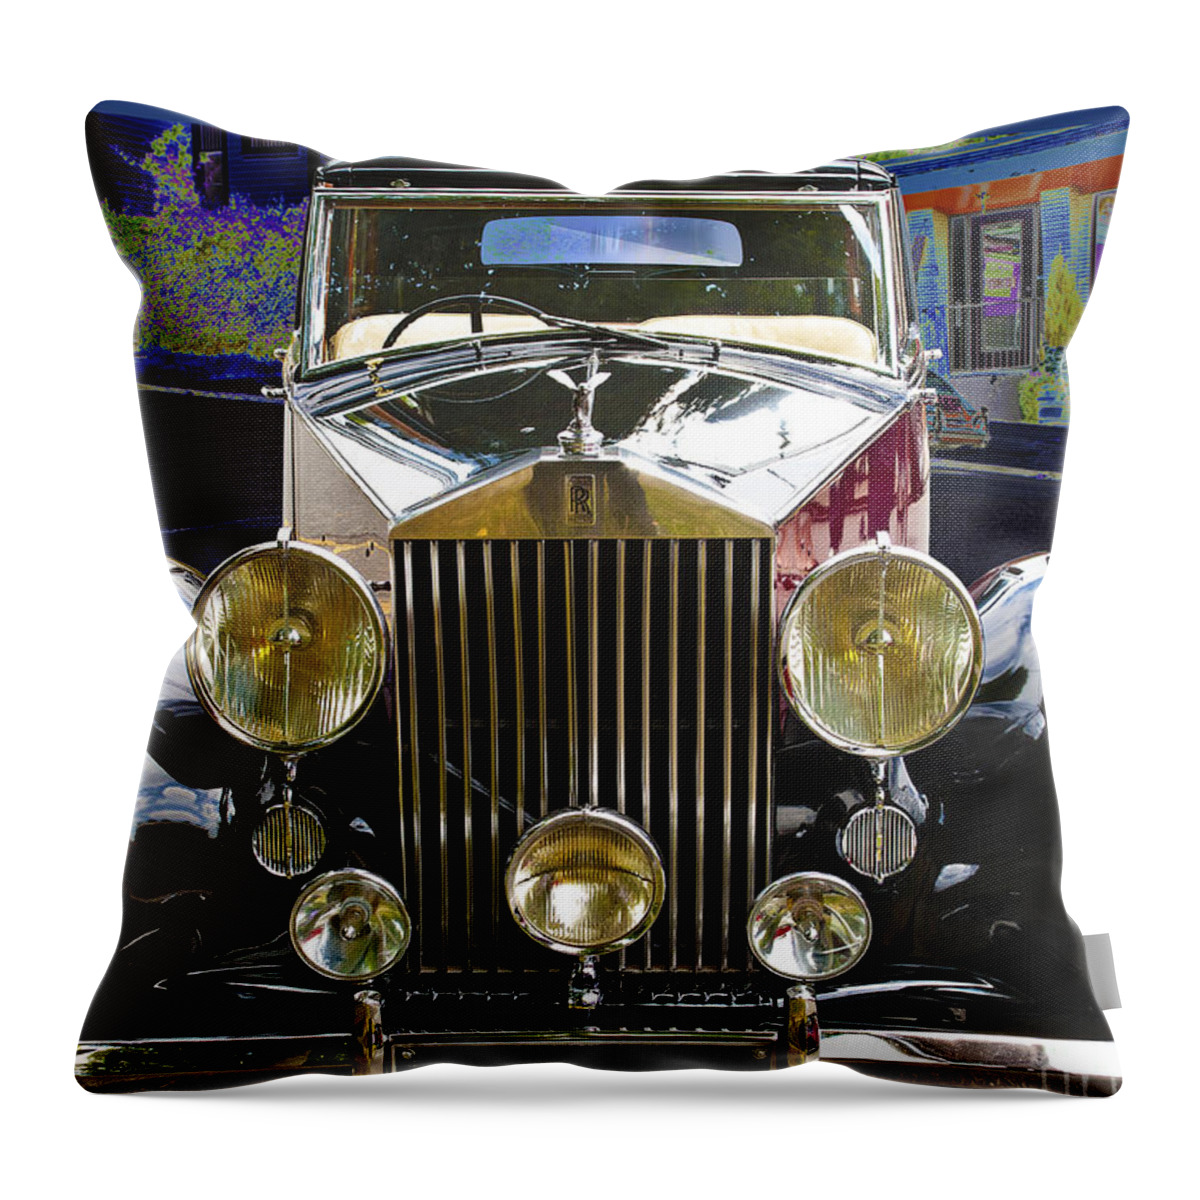 Antique Rolls Royce Throw Pillow featuring the digital art Antique Rolls Royce by Victoria Harrington